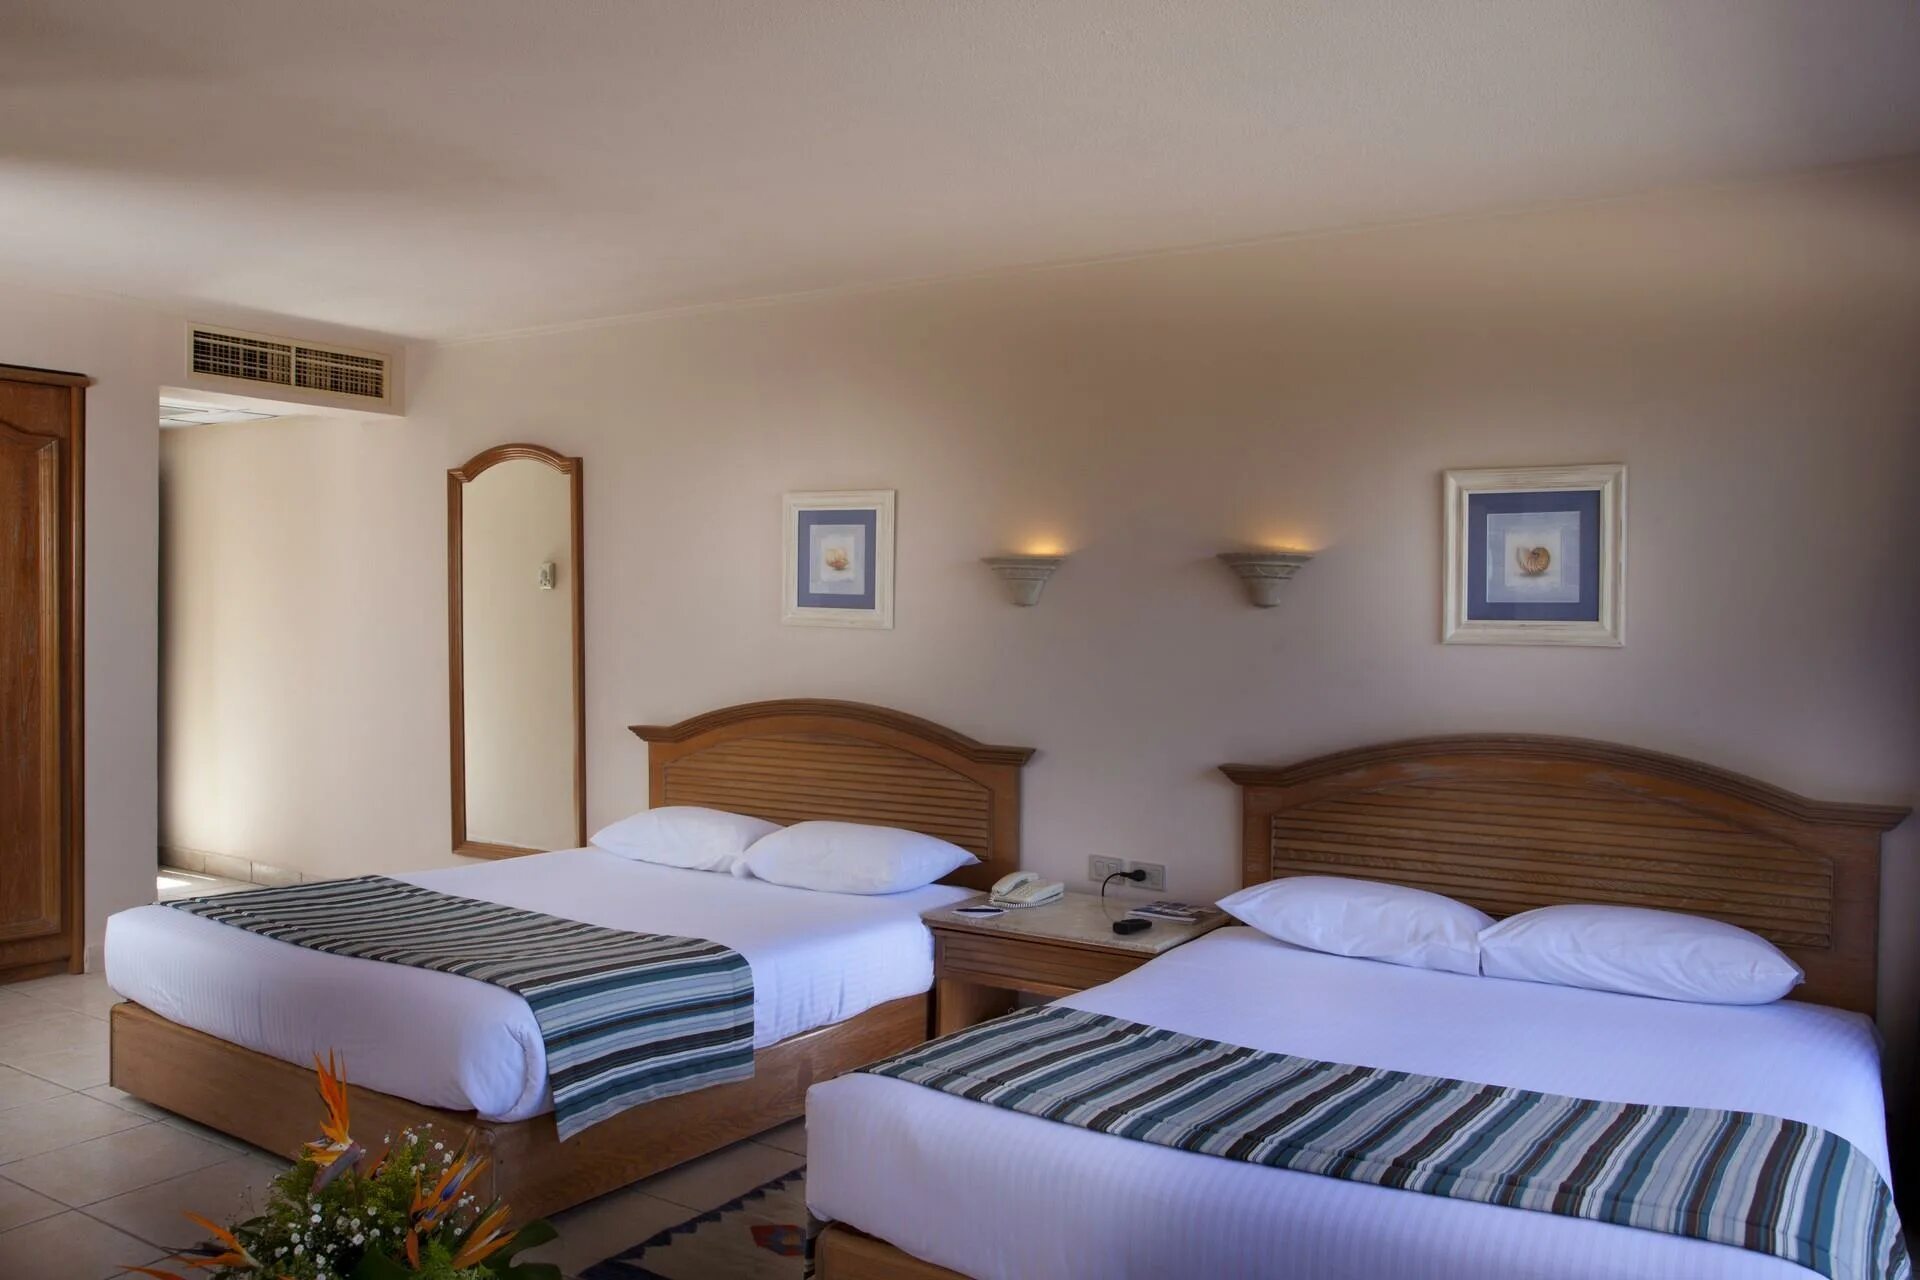 Coral beach resort хургада. Отель Coral Beach Hotel Hurghada. Корал Бич Хургада. Coral Beach Hotel Hurghada 4. Египет Хургада отель Корал Бич Резорт 4 звезды.